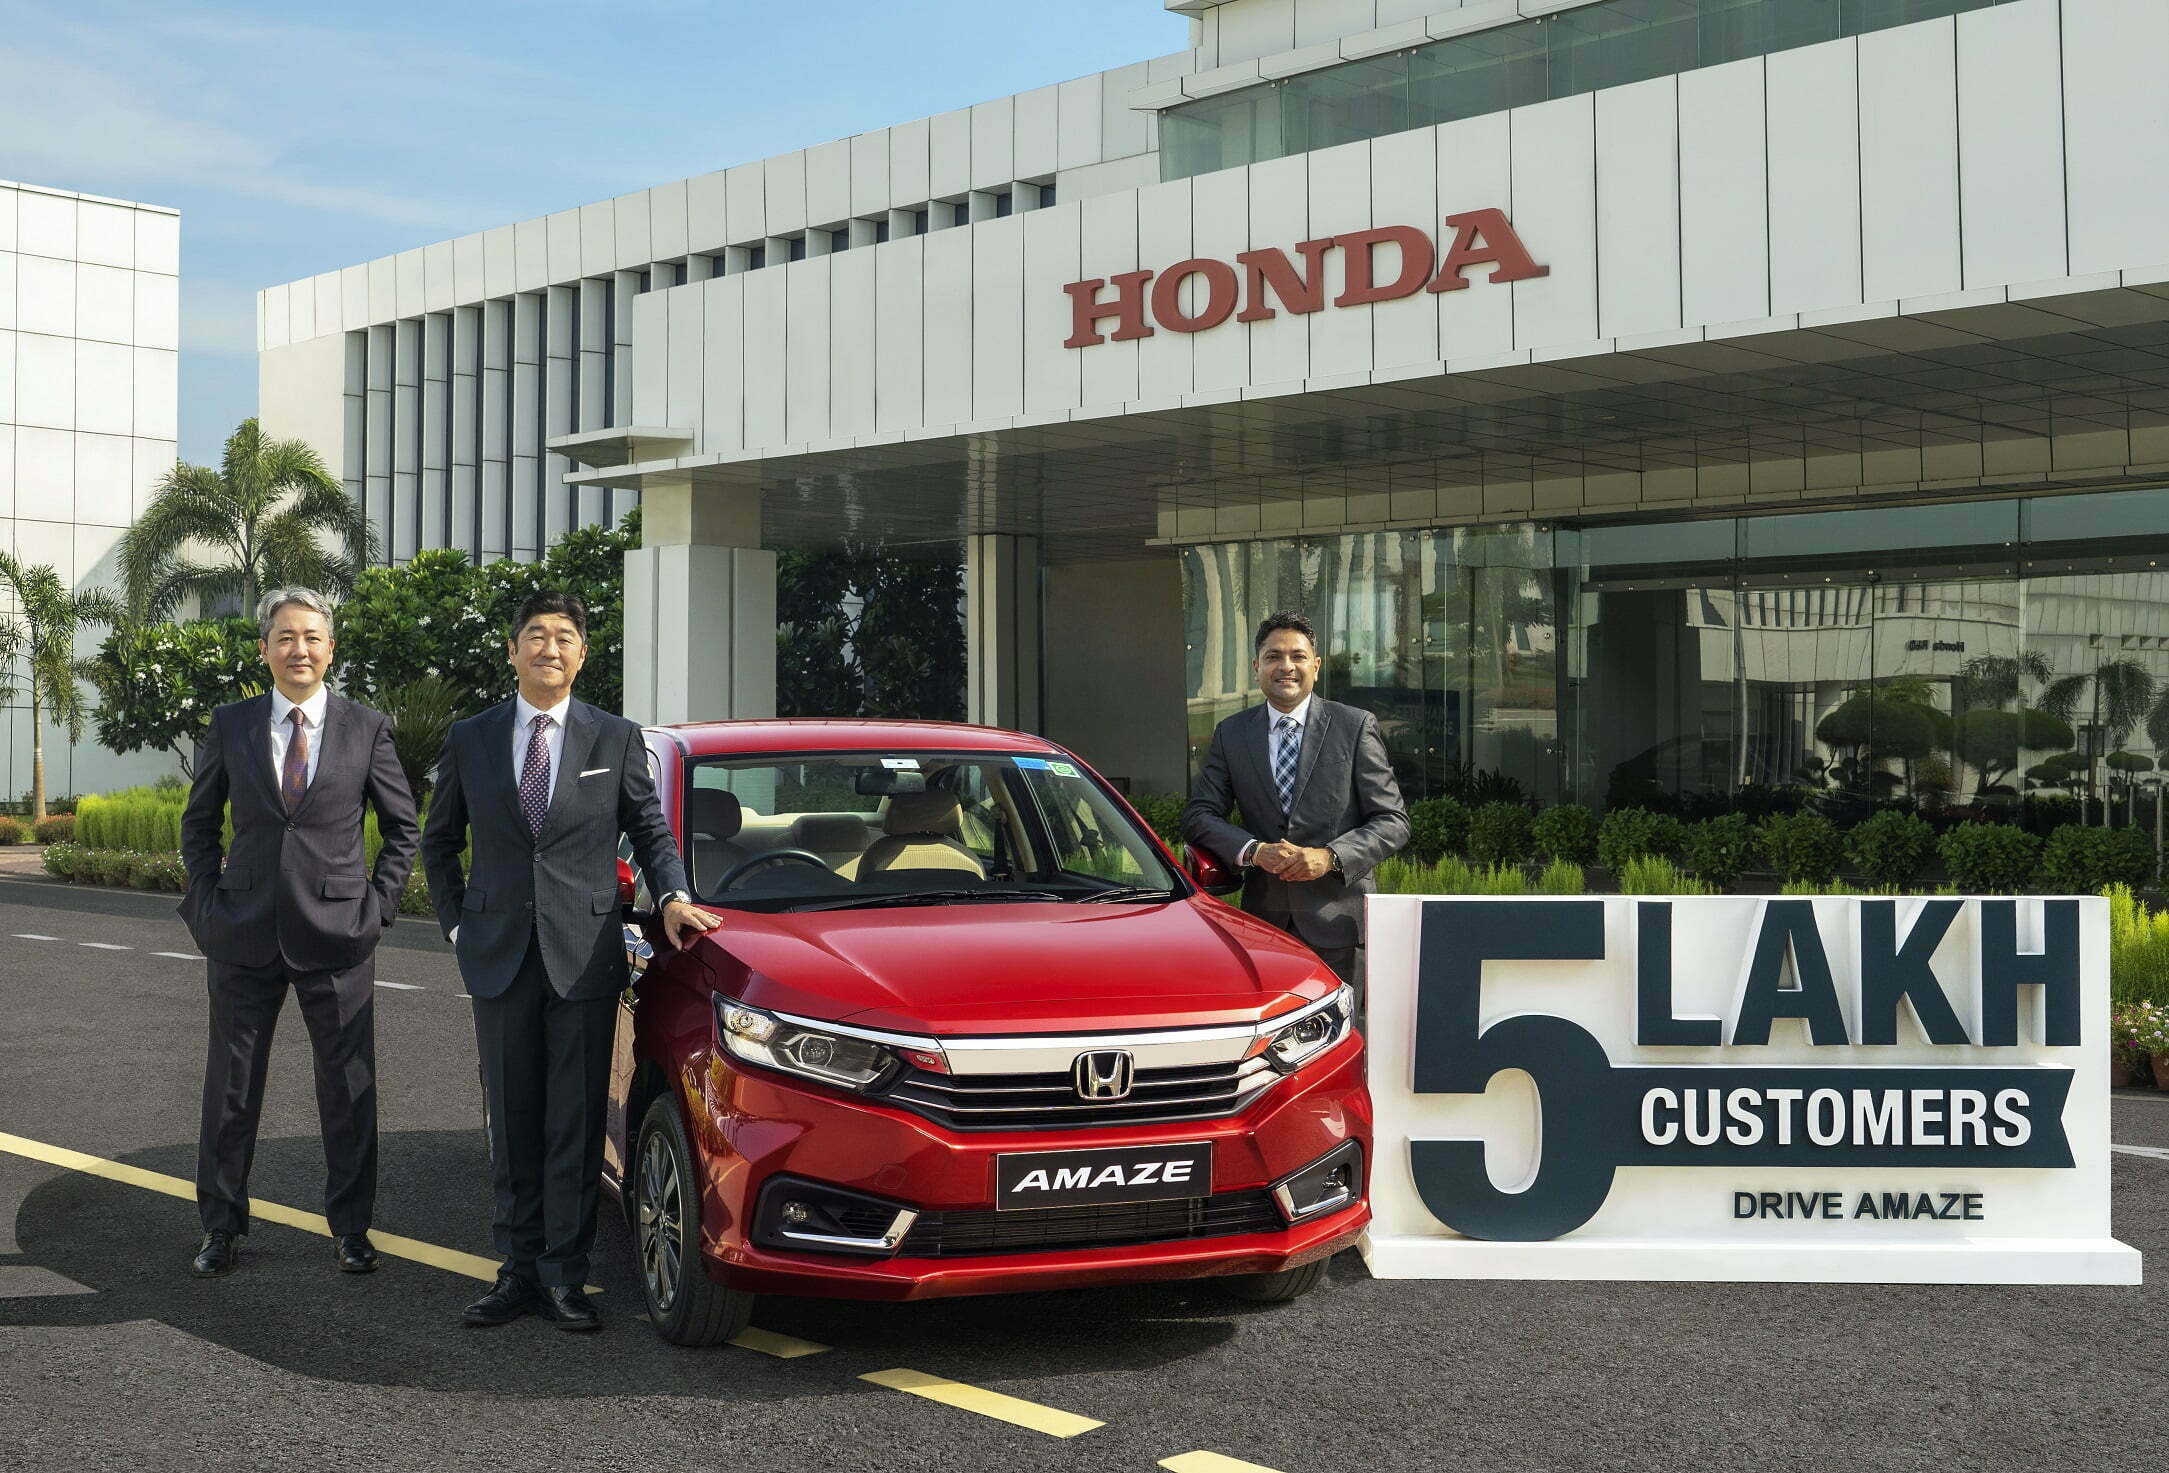 Honda Amaze Sales Reach 5 Lakh Units - Best Compact Sedan In Its Class